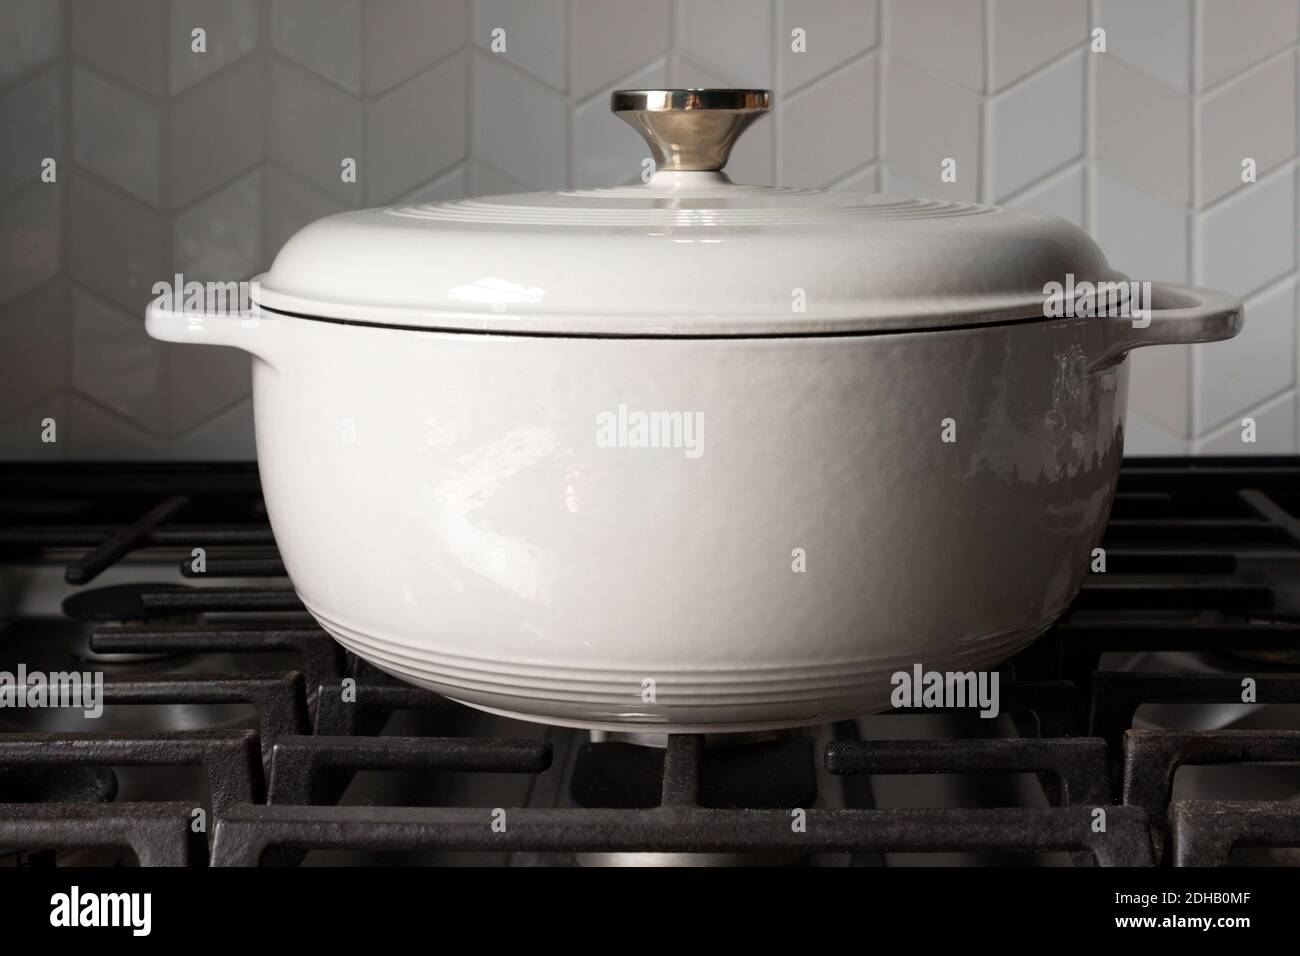 https://c8.alamy.com/comp/2DHB0MF/a-large-white-enameled-cast-iron-crock-pot-on-an-unlit-stove-top-with-natural-lighting-and-a-chevron-backsplash-2DHB0MF.jpg